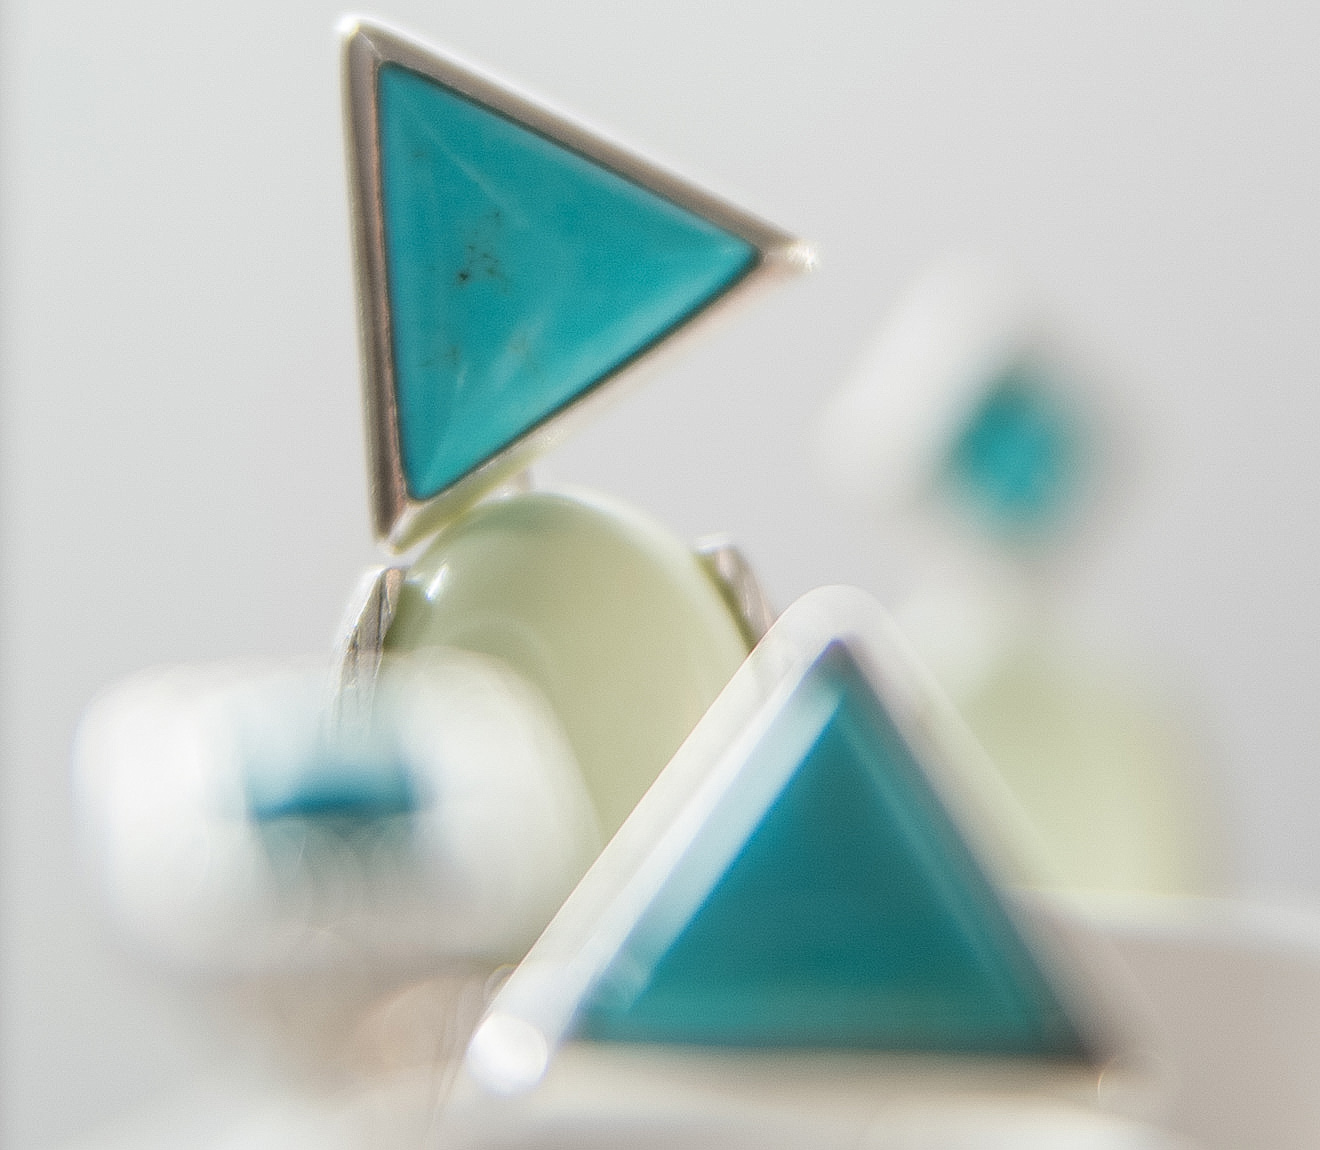 Triangular dualpurpose earrings,turquoise close up view,crisolemon,turquoise